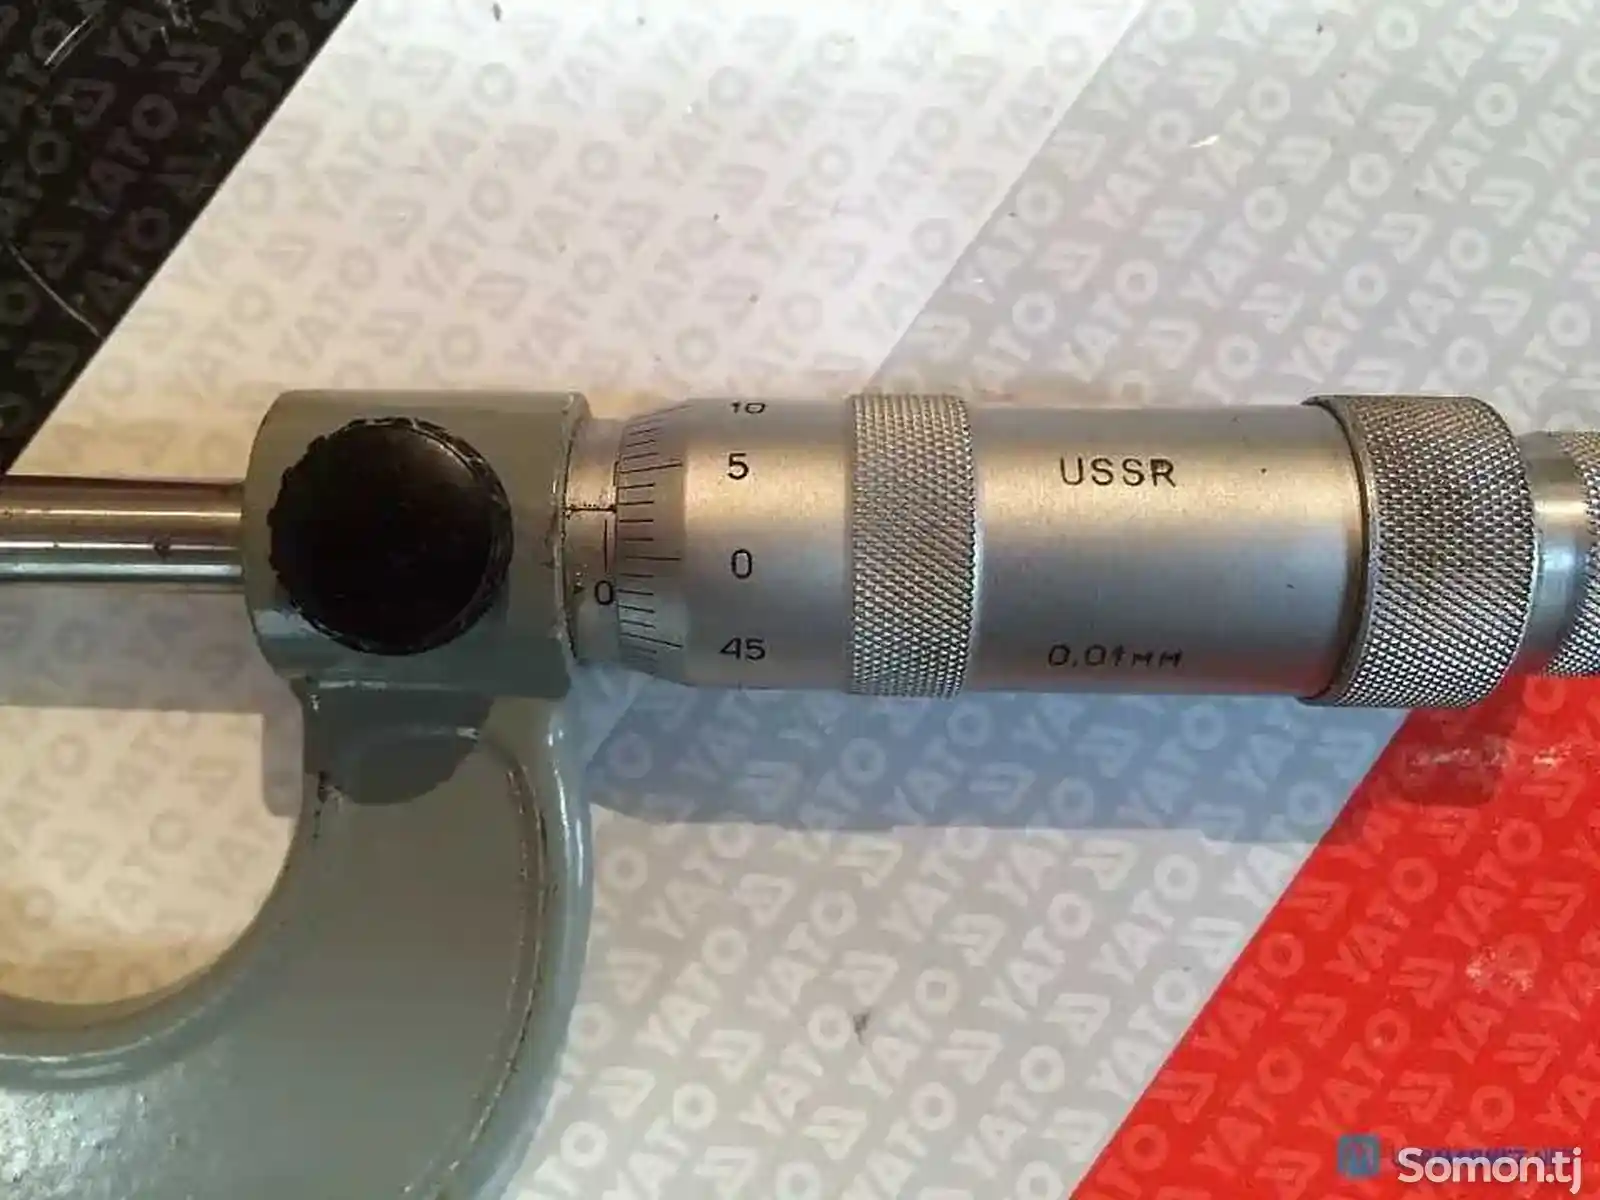 Микрометр ussr 0.01mm-2